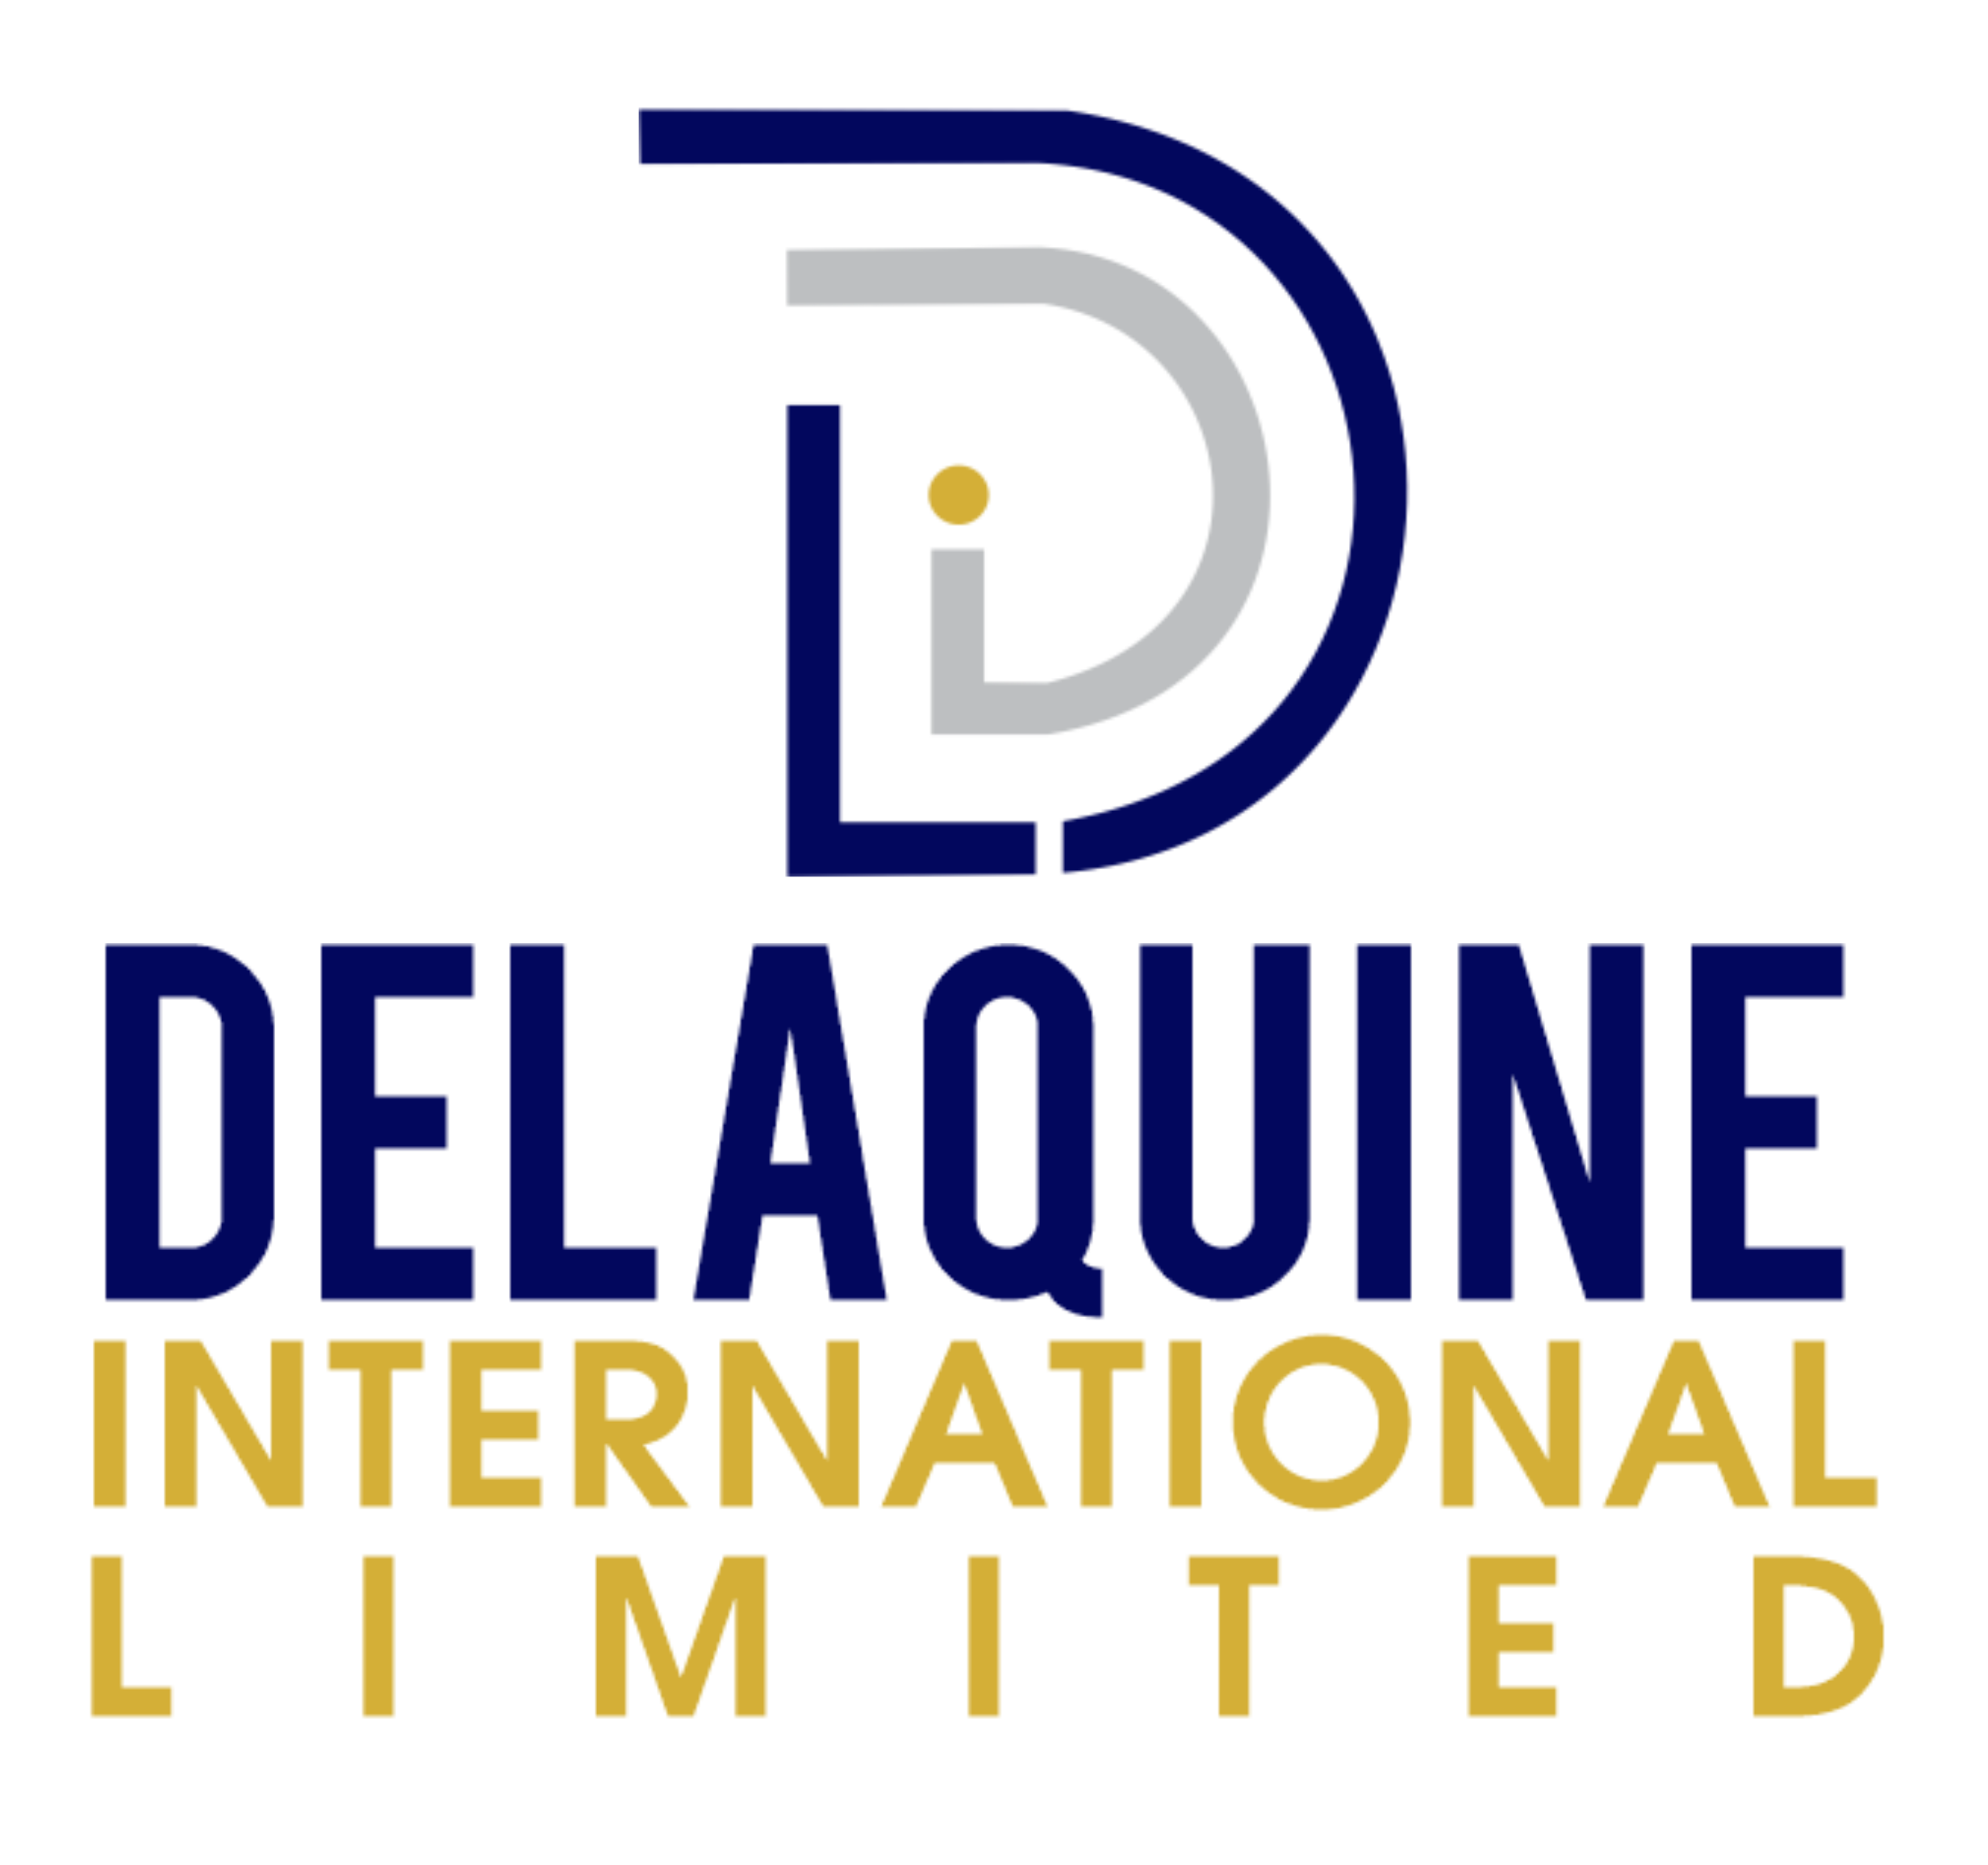 Delaquine International Limited